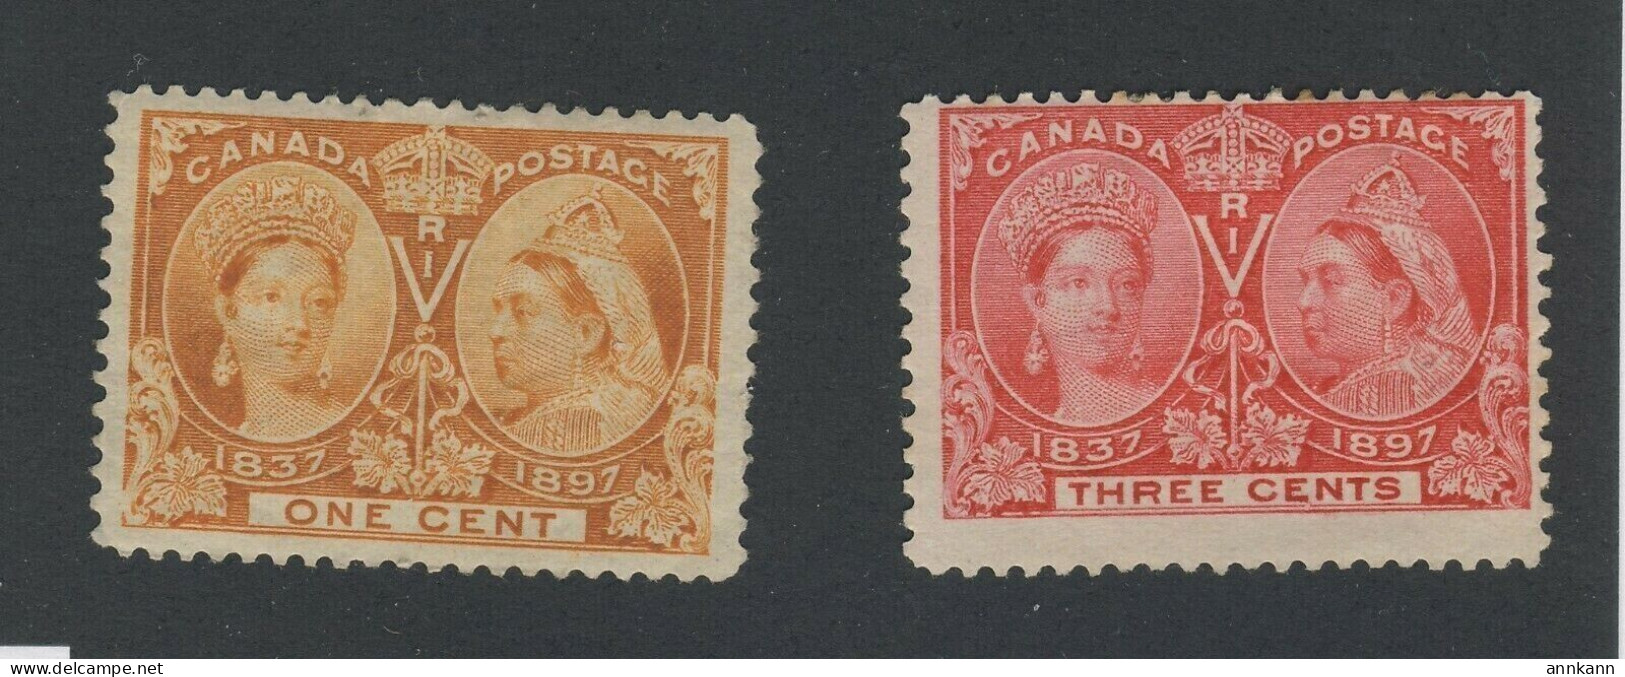 2x Canada Victoria Jubilee MH Stamps #51-1c F/VF 53-3c Fine Guide Value = $35.00 - Unused Stamps